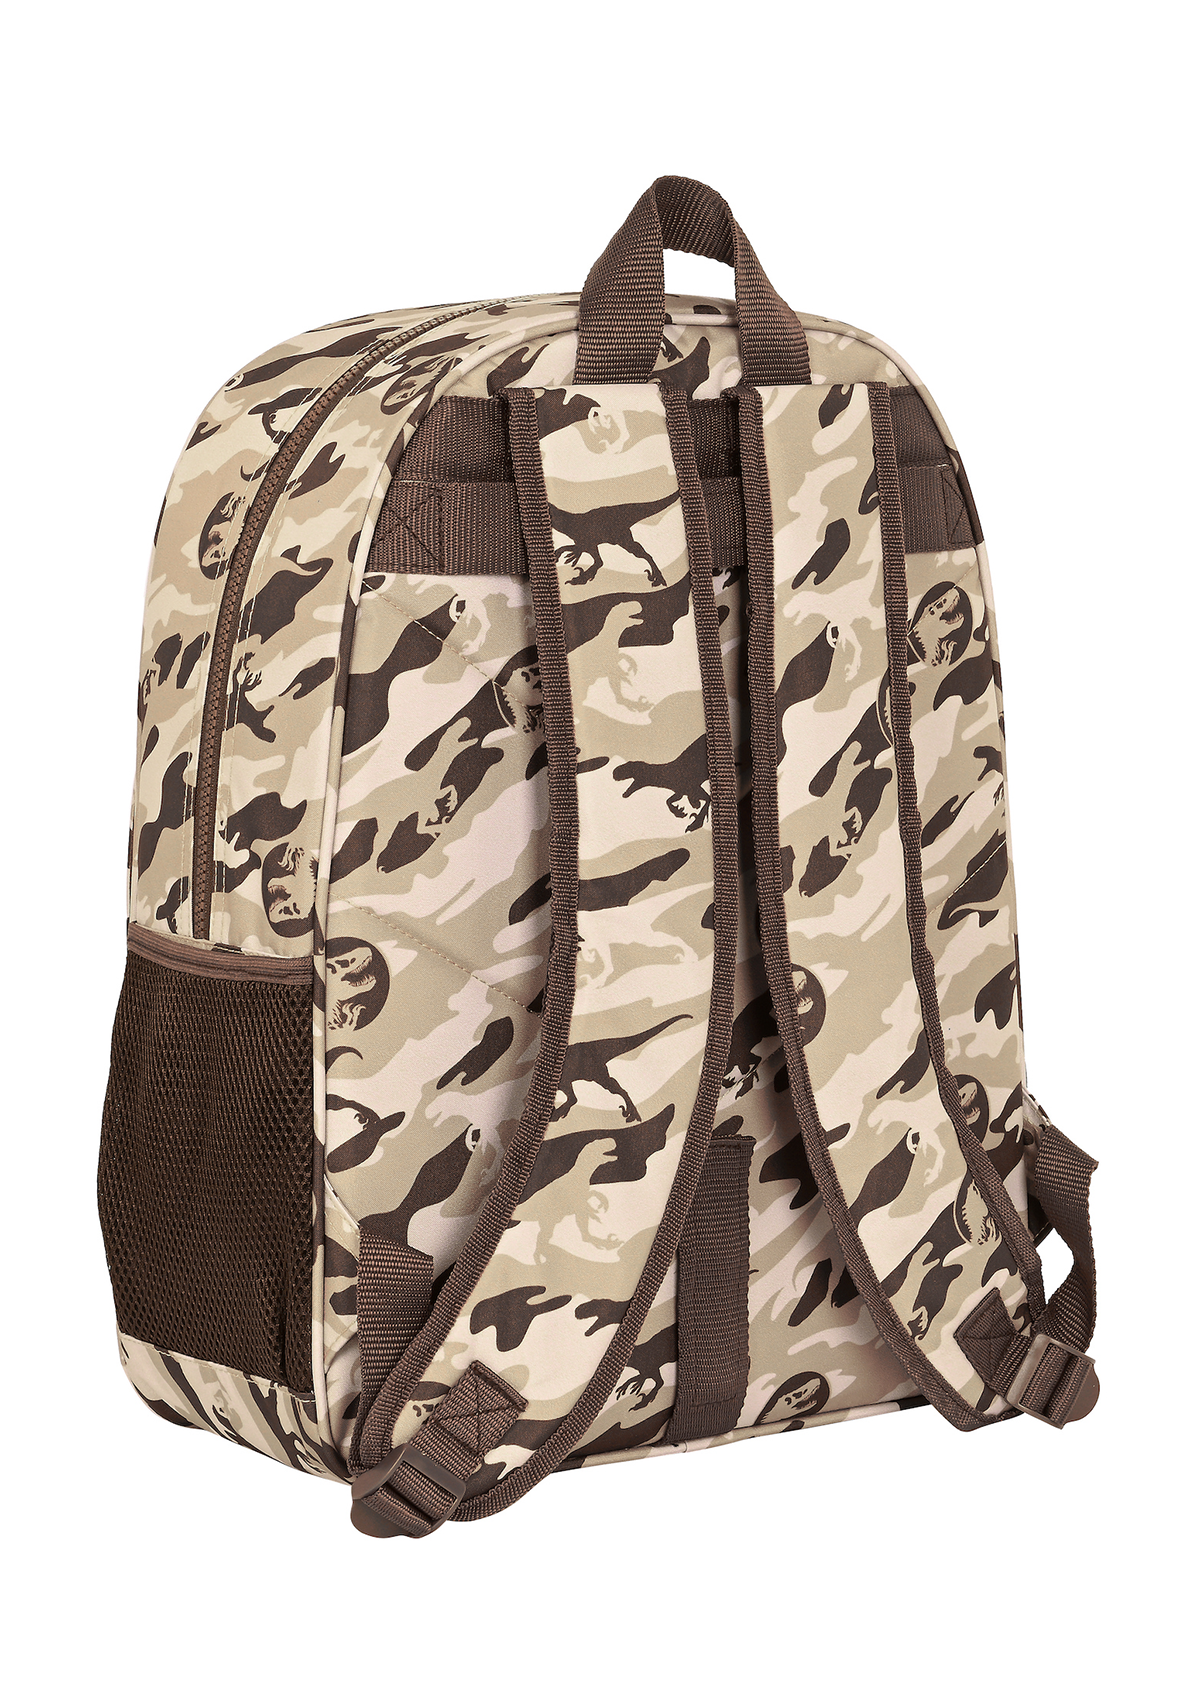 Jurassic World Large Backpack